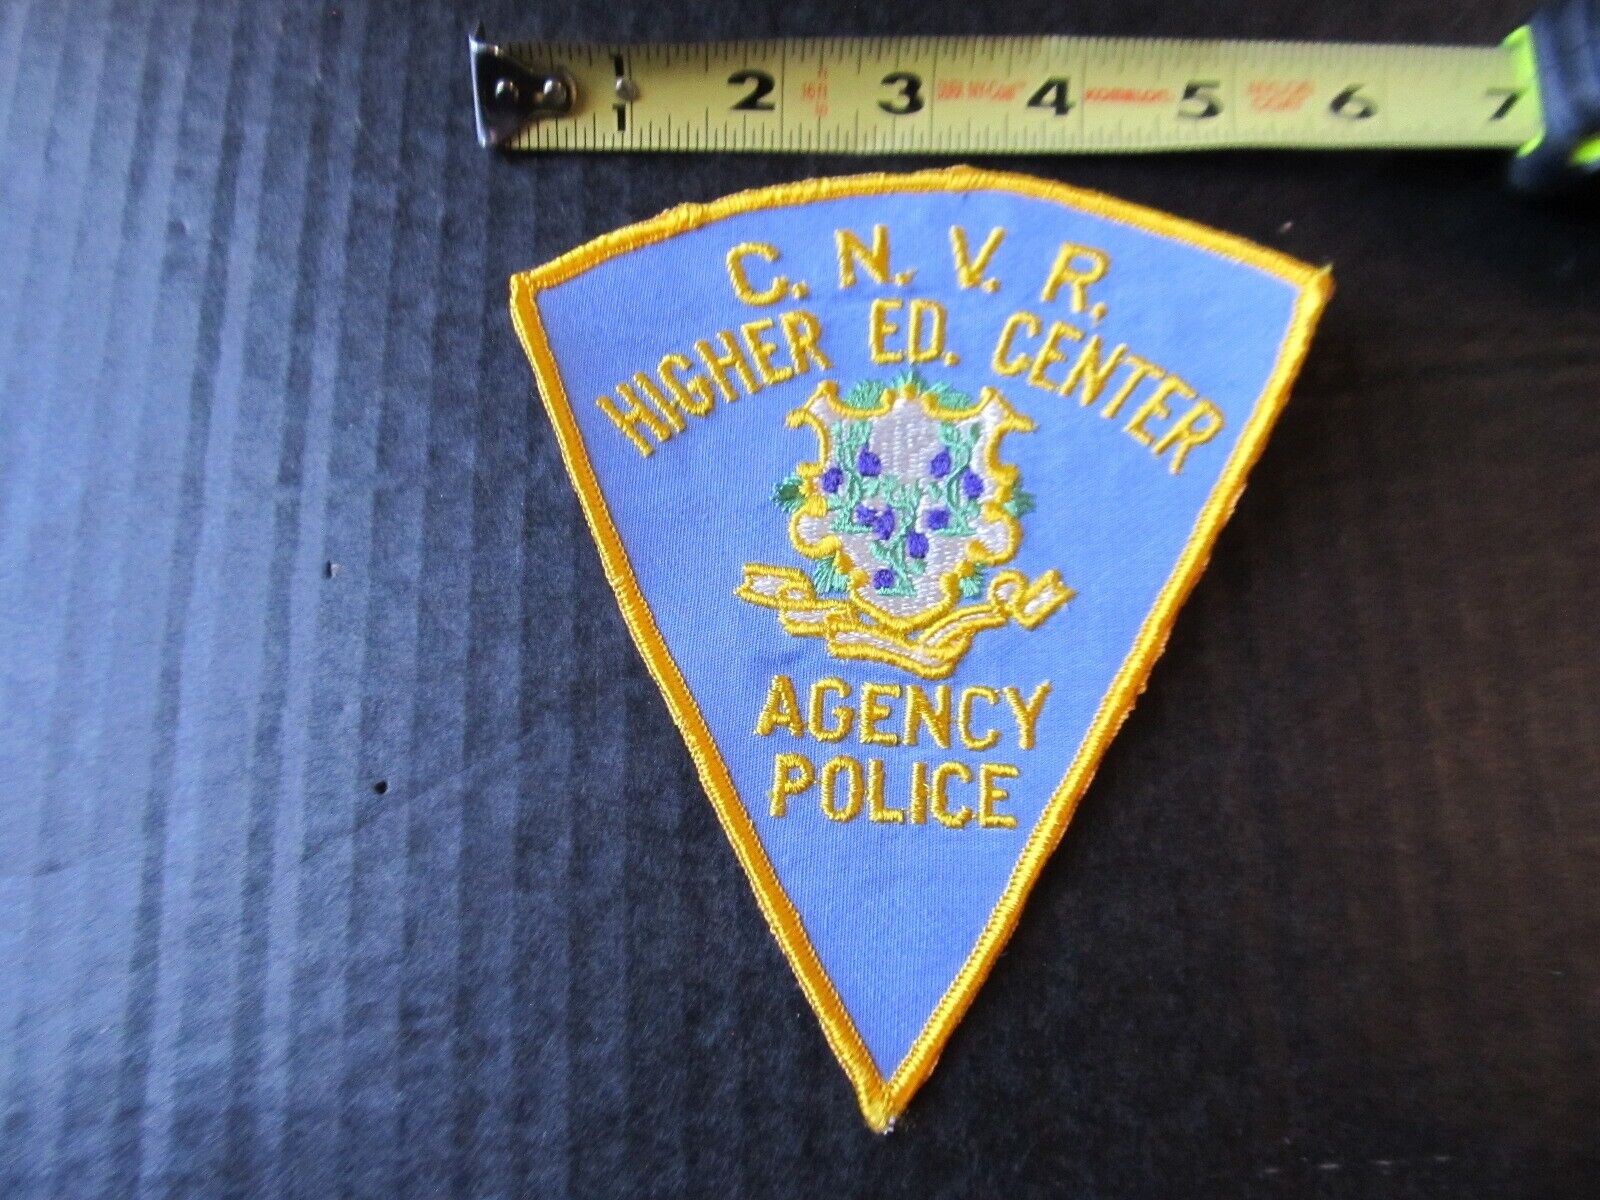 OVintage CNVR Higher Ed Center Police Patch Obsolete 